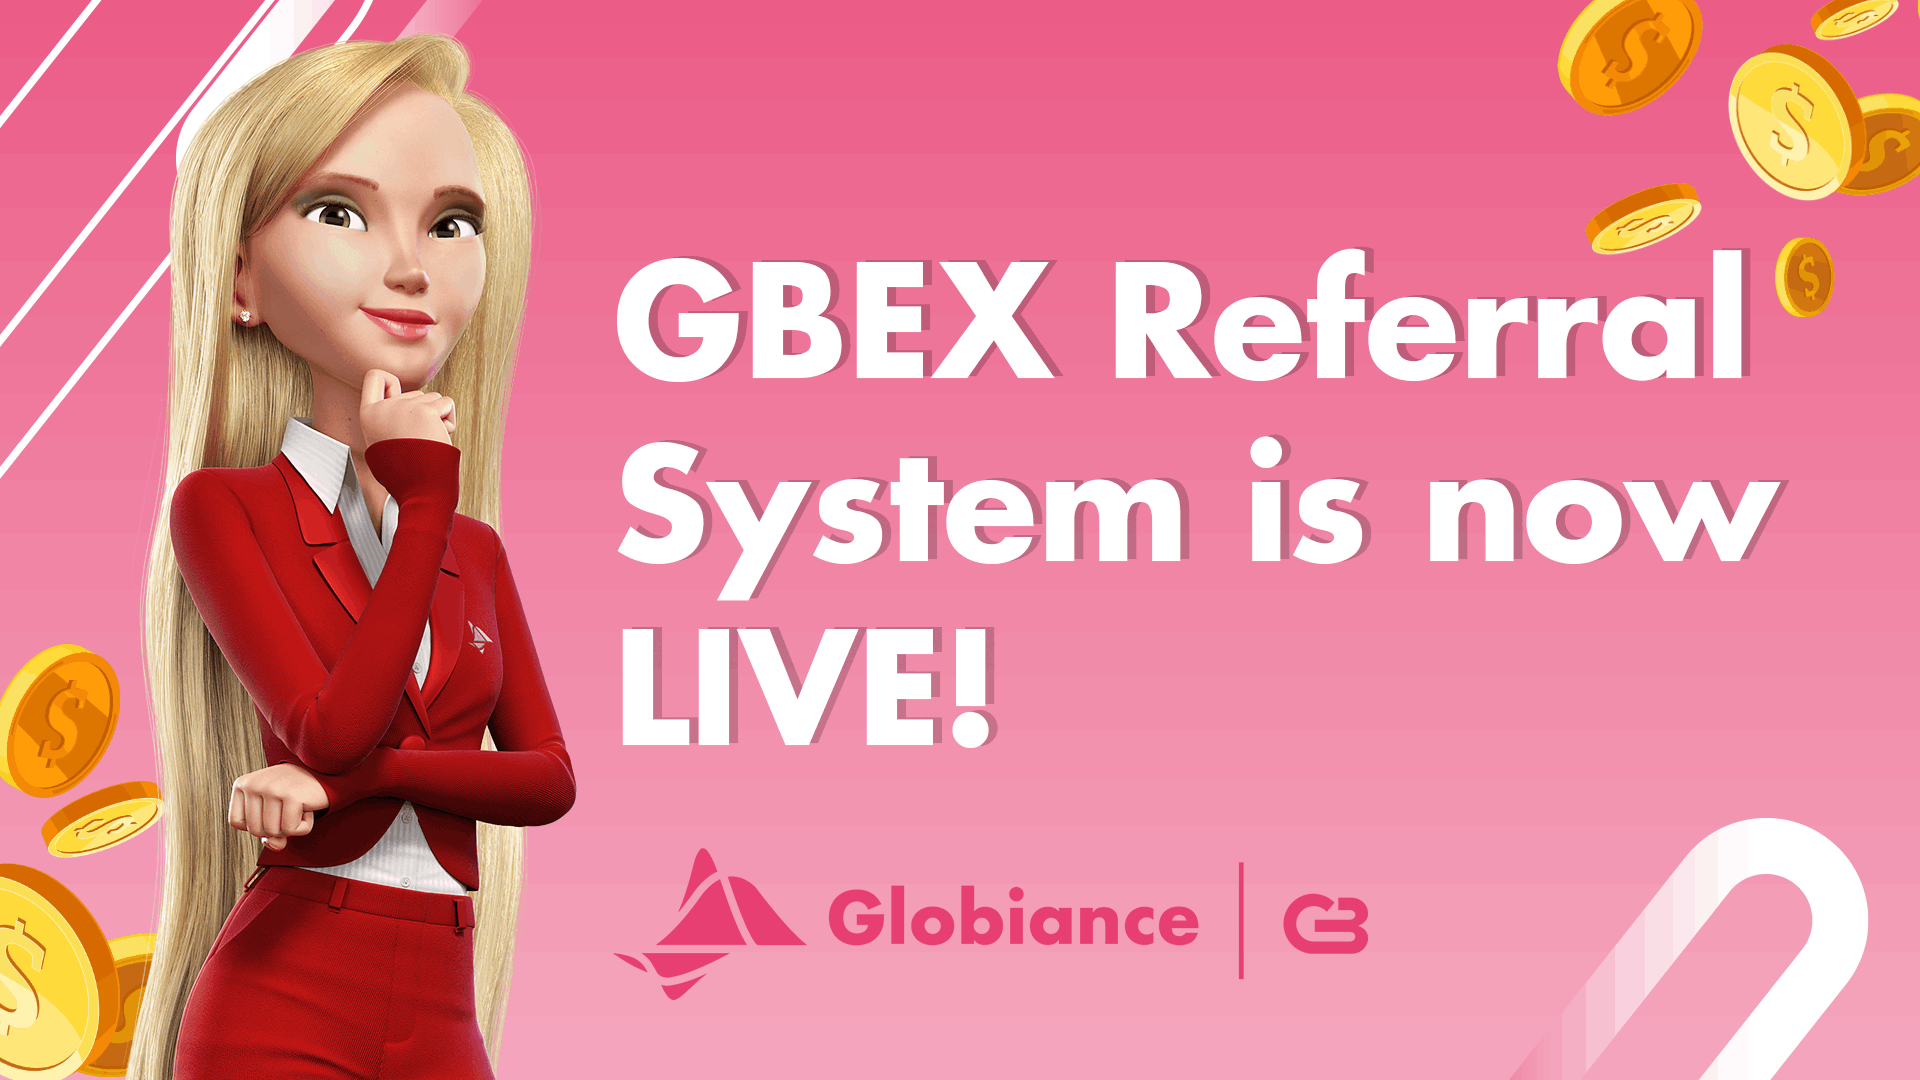 GBEX Referral